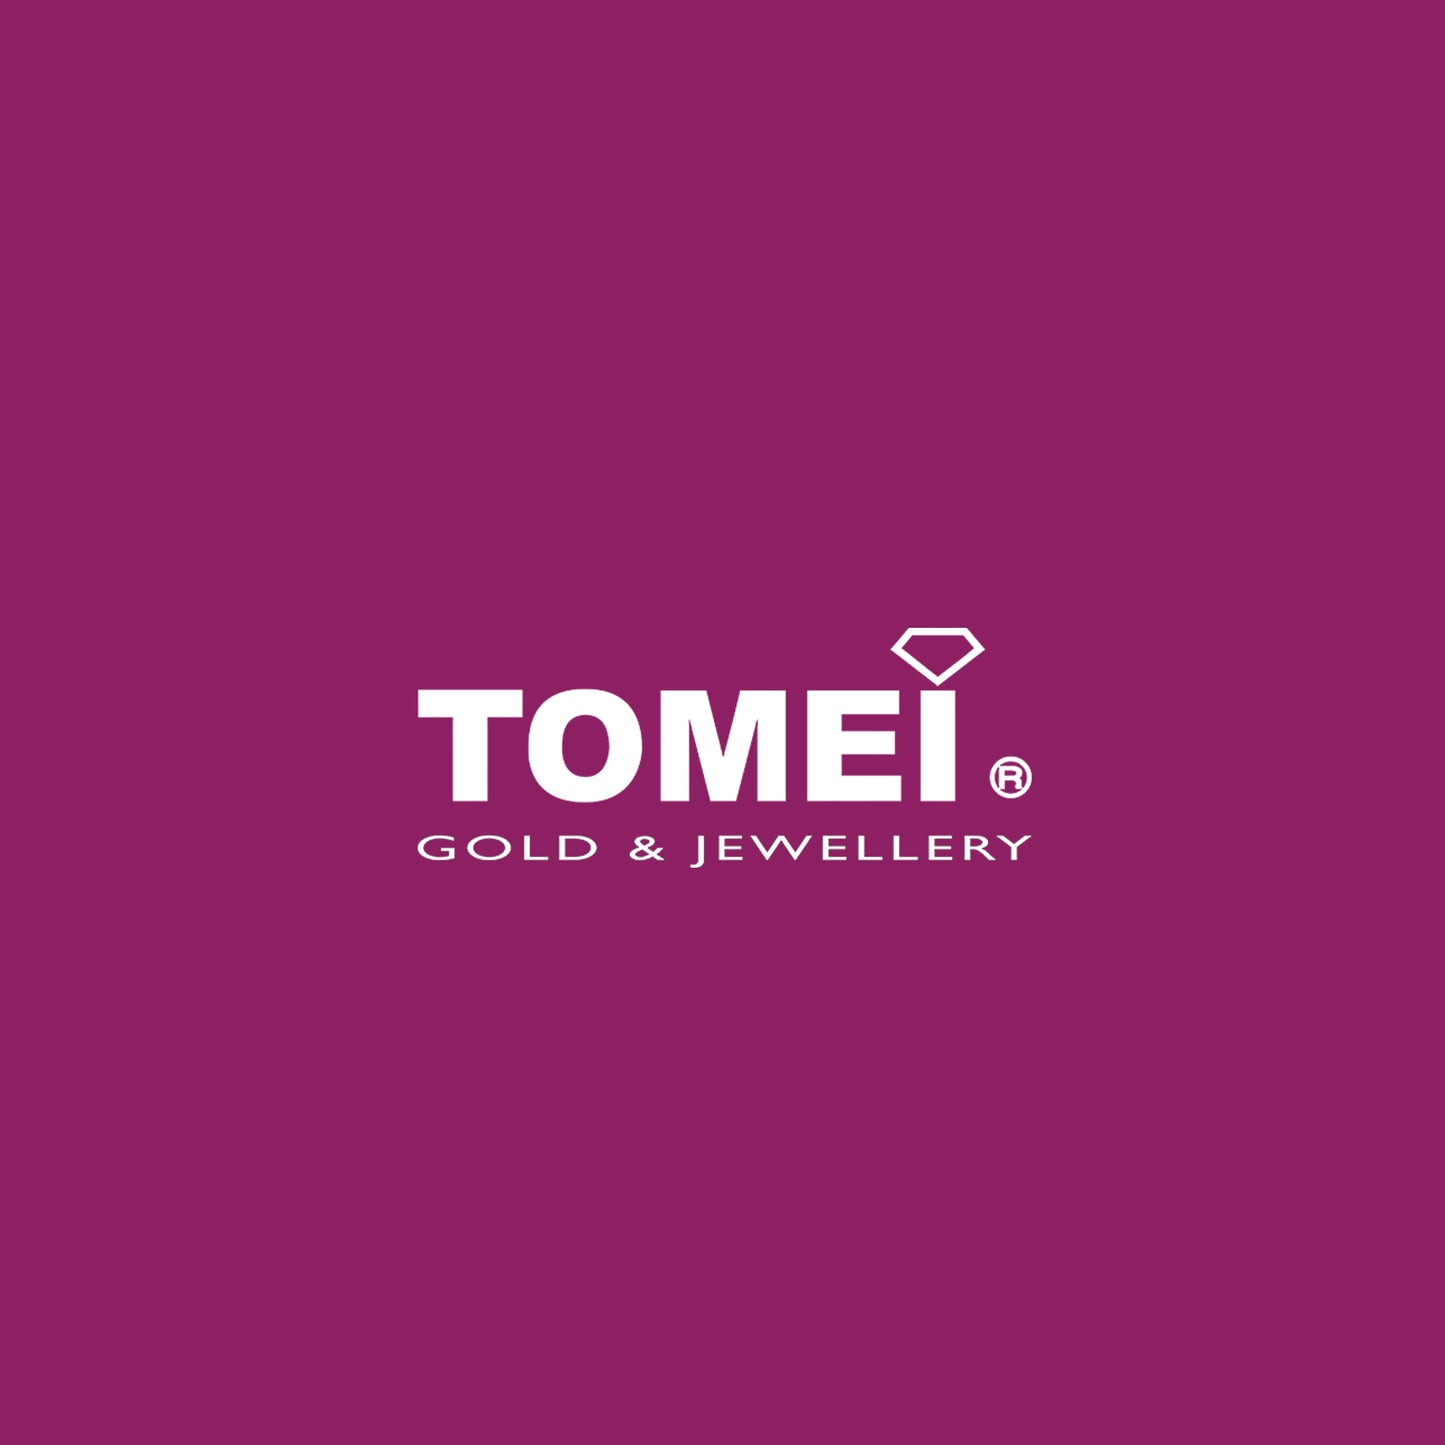 TOMEI Florentina Earrings, Diamond White Gold 750 (E1309)